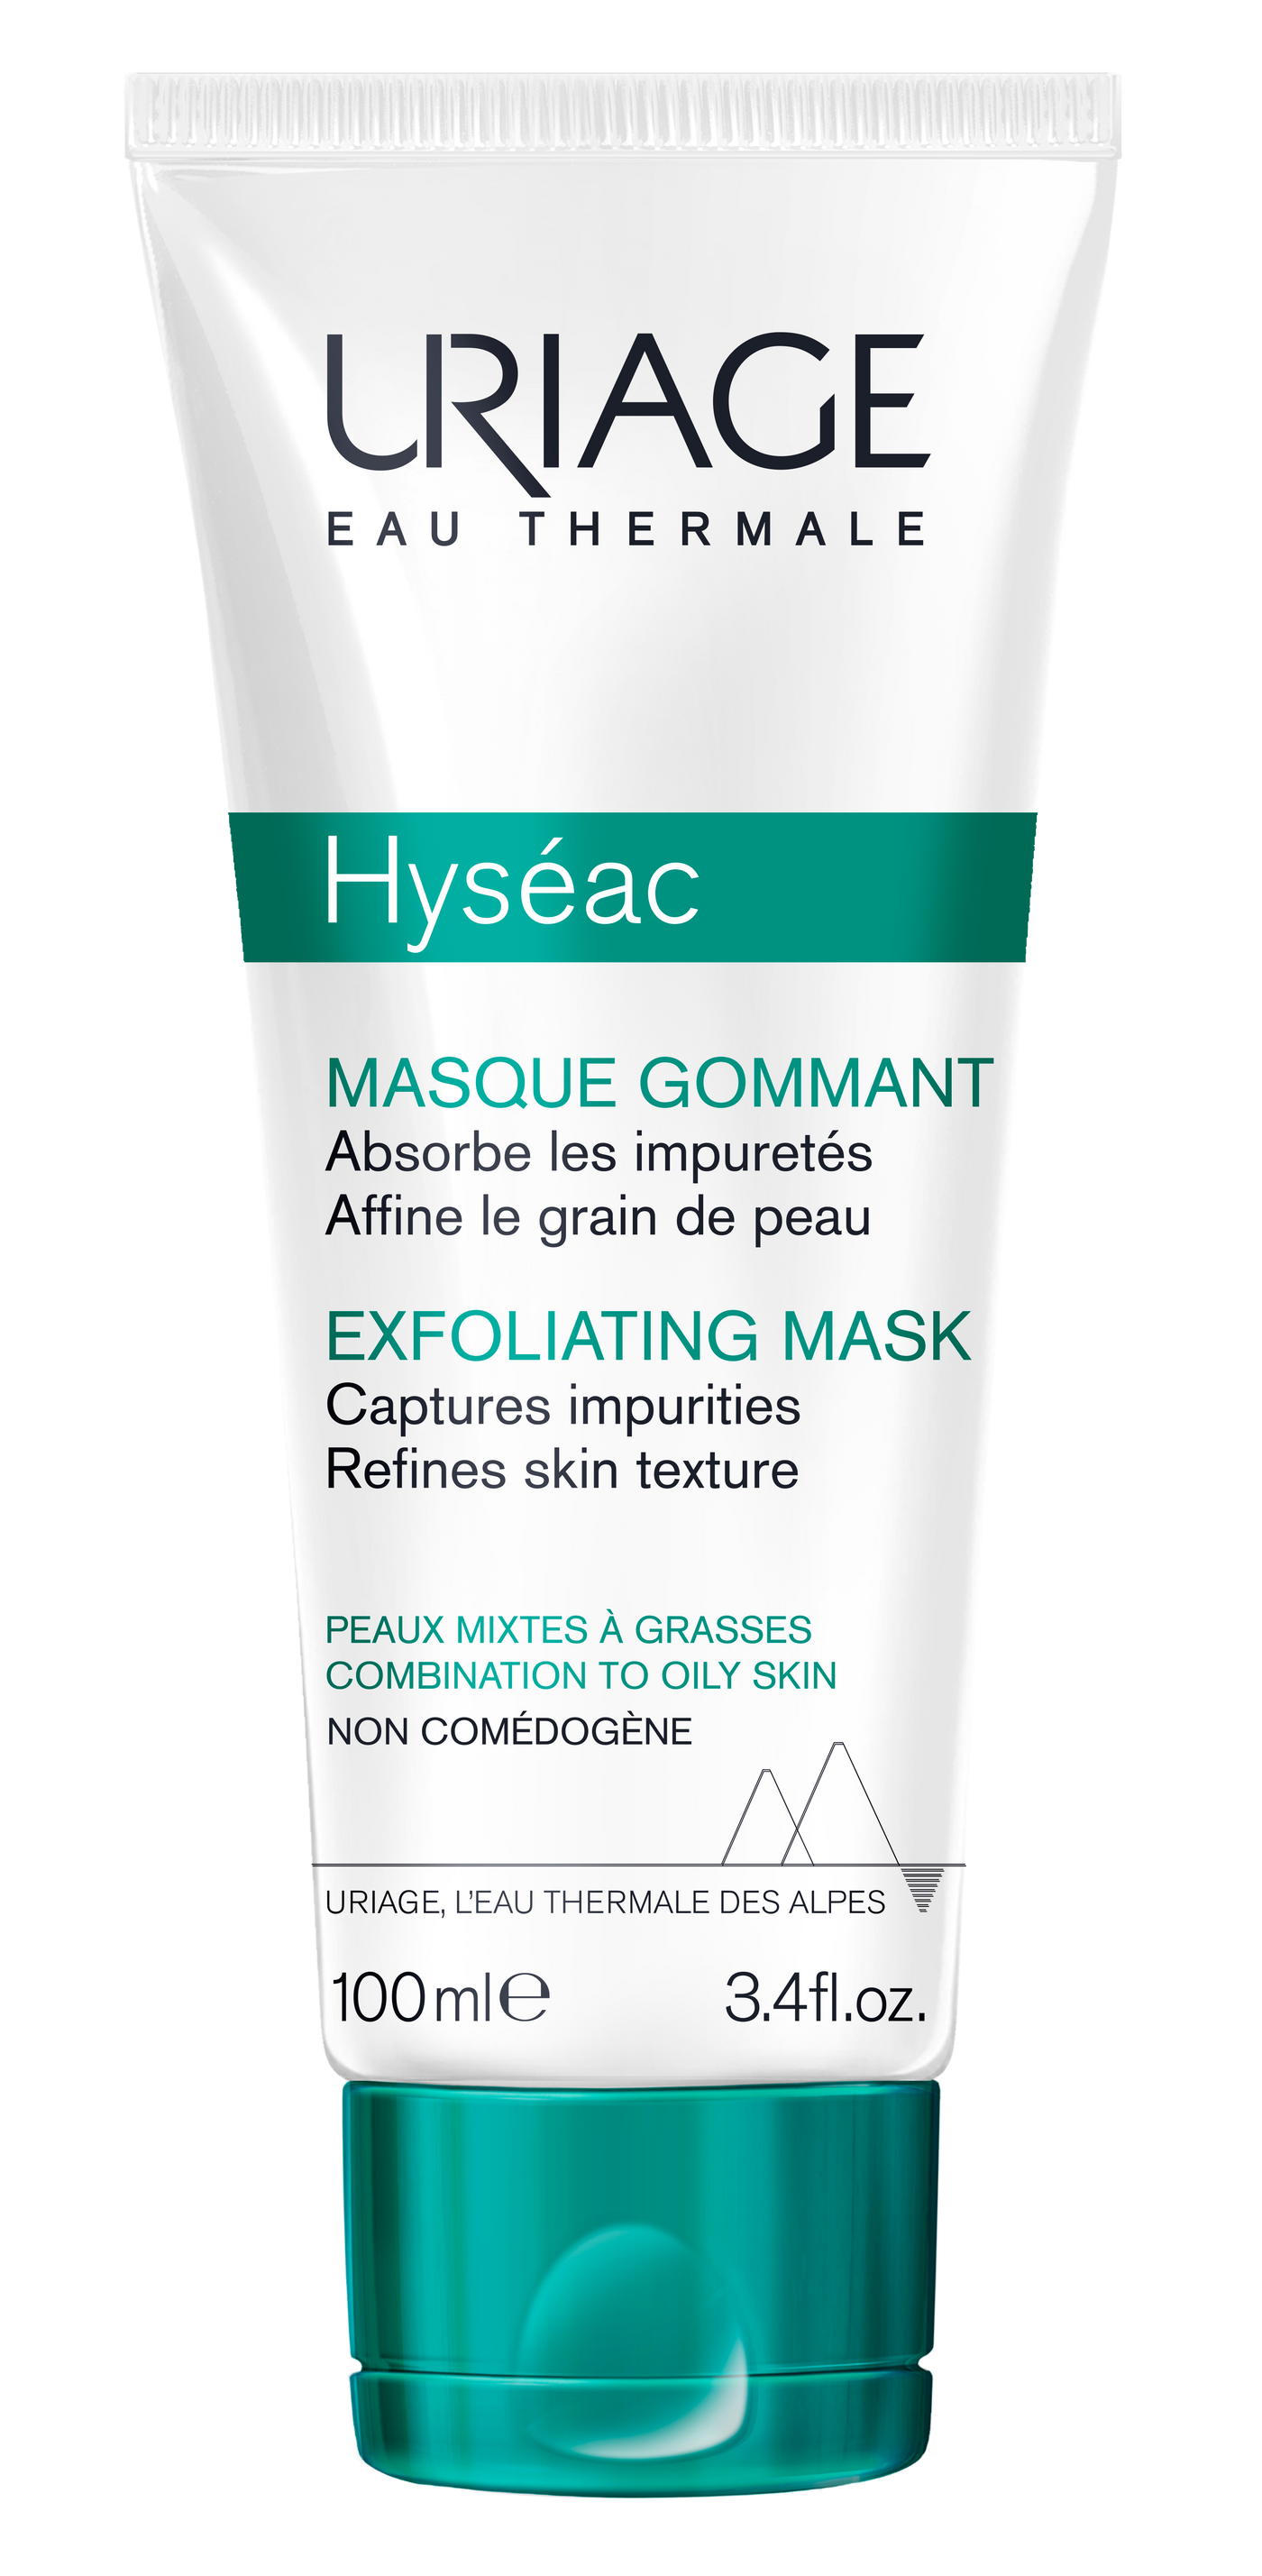 Uriage - Hyseac Masque Gommant - Tube 100 Ml